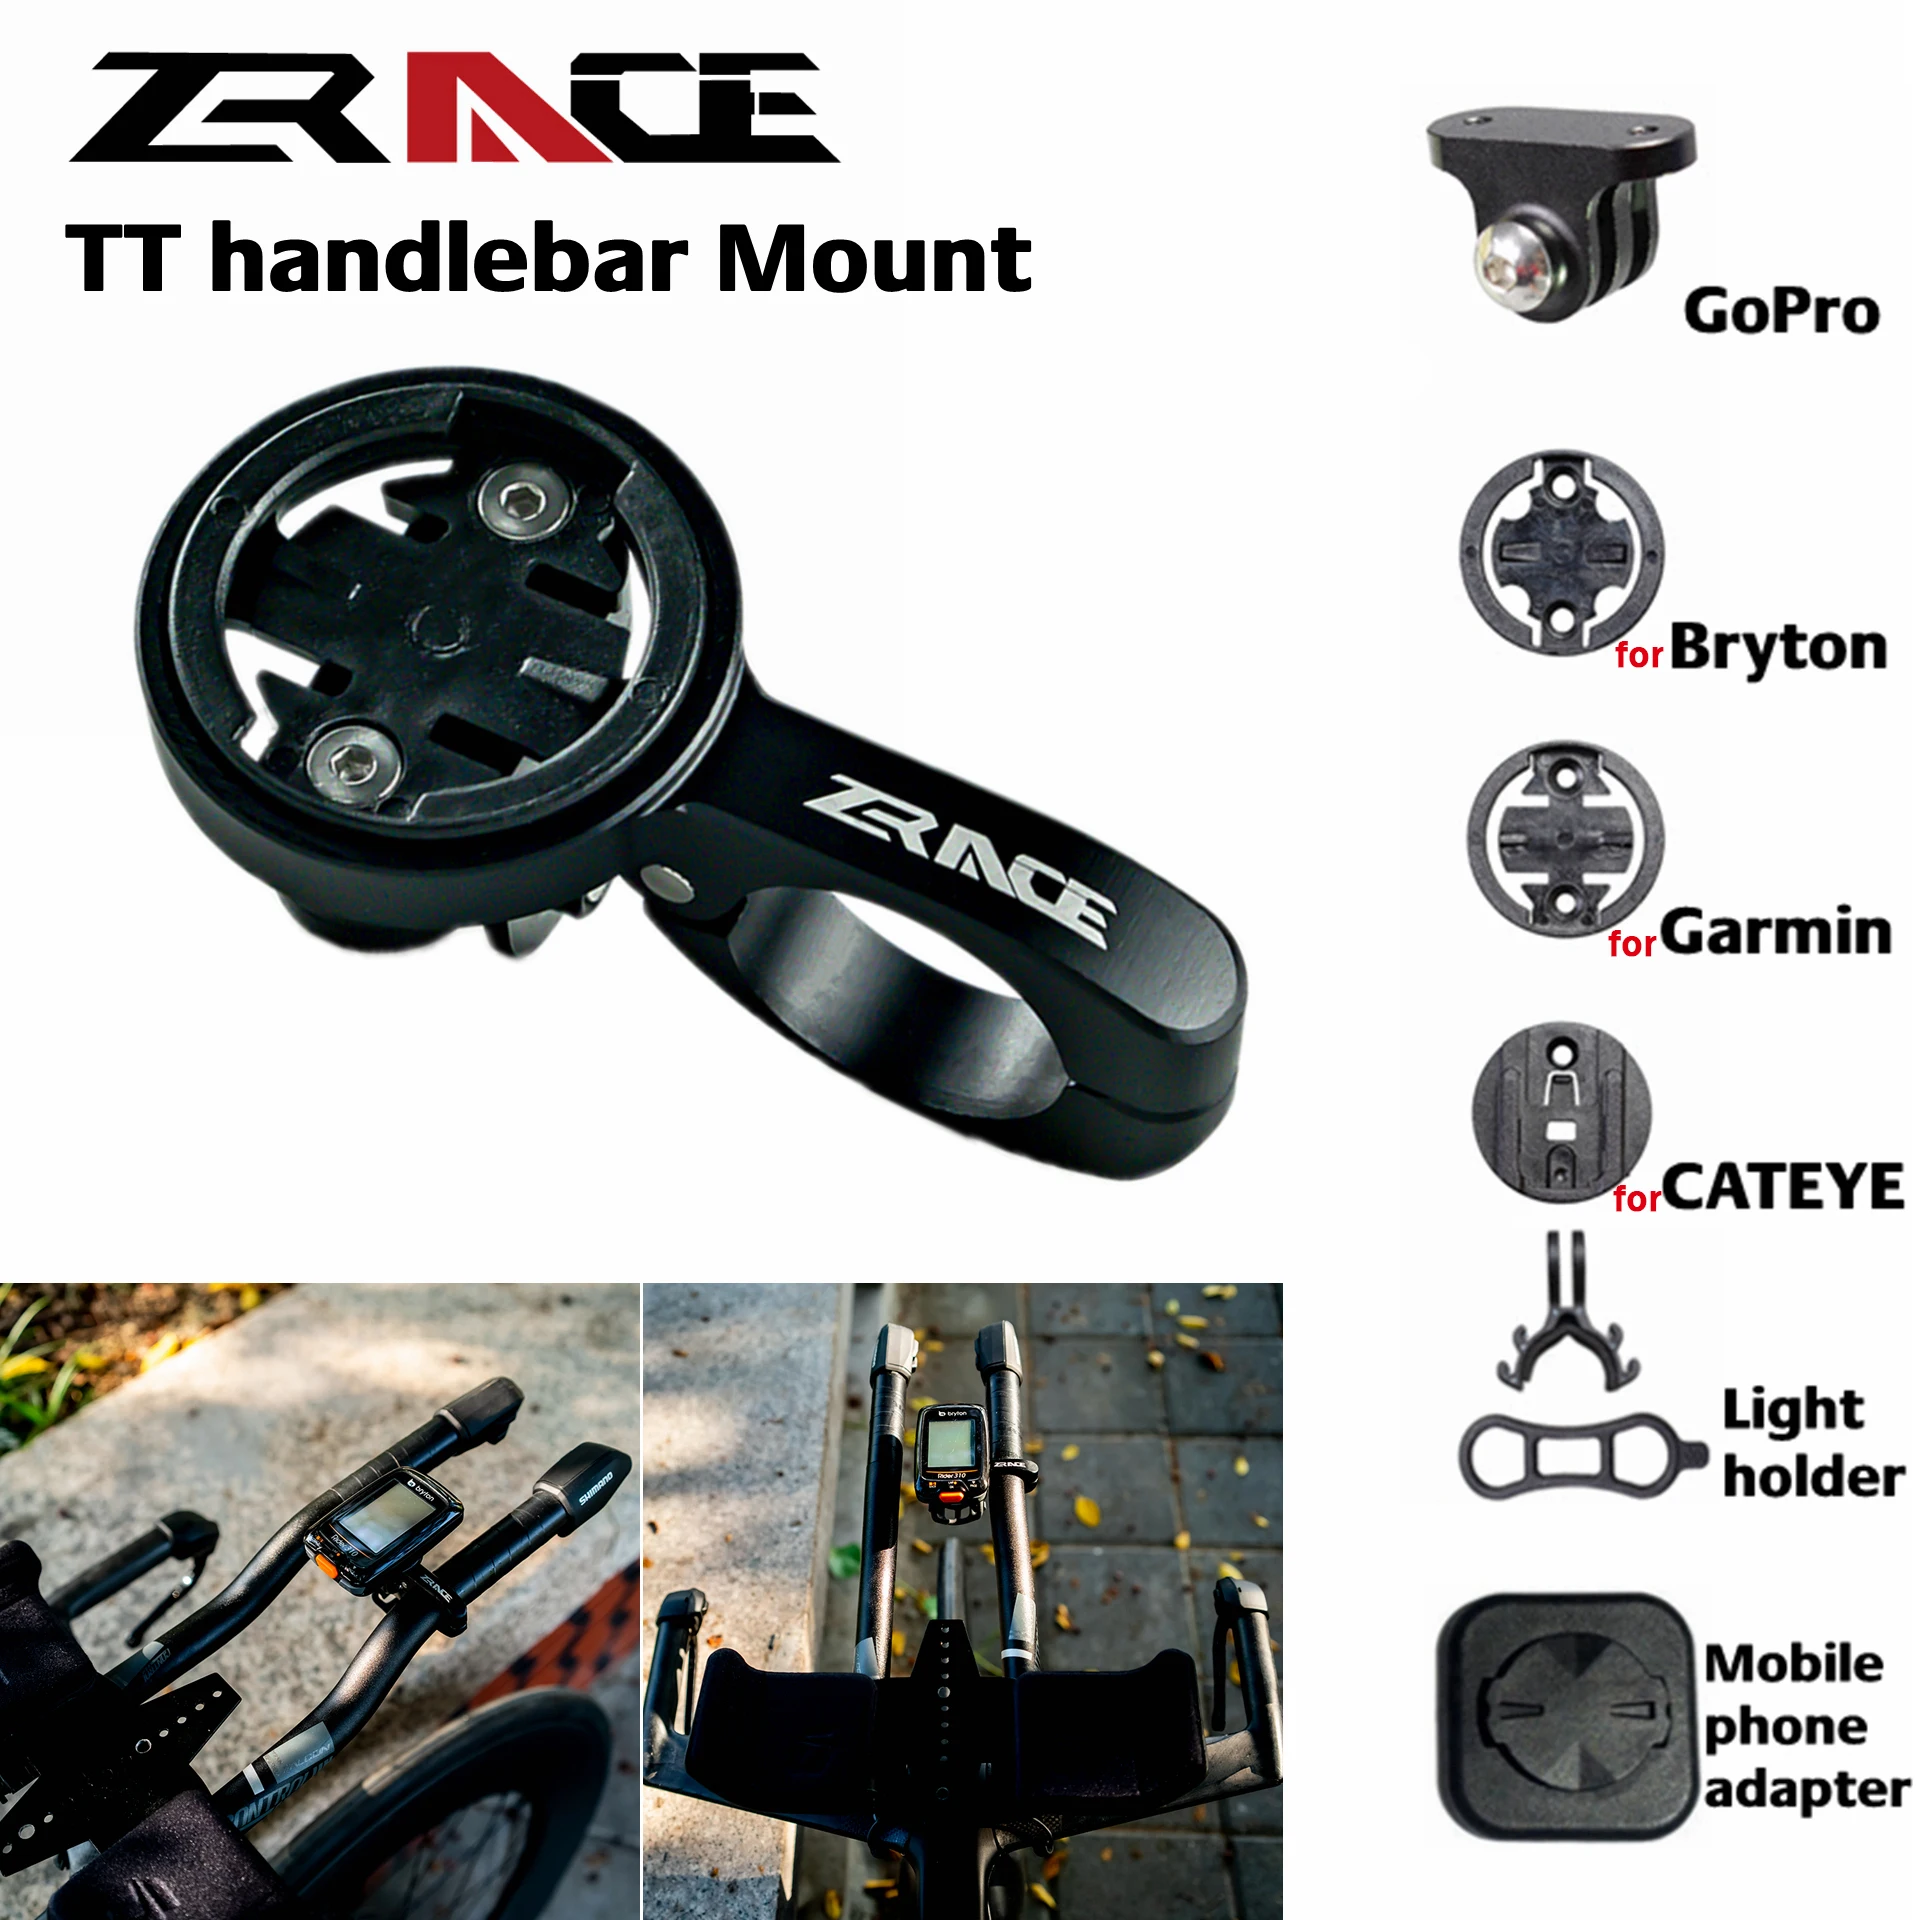 

ZRACE TT Handlebar Computer Mount - Black, Out Front Mount Holder For iGPSPORT For Garmin For Bryton GoPro For CATEYE Camera